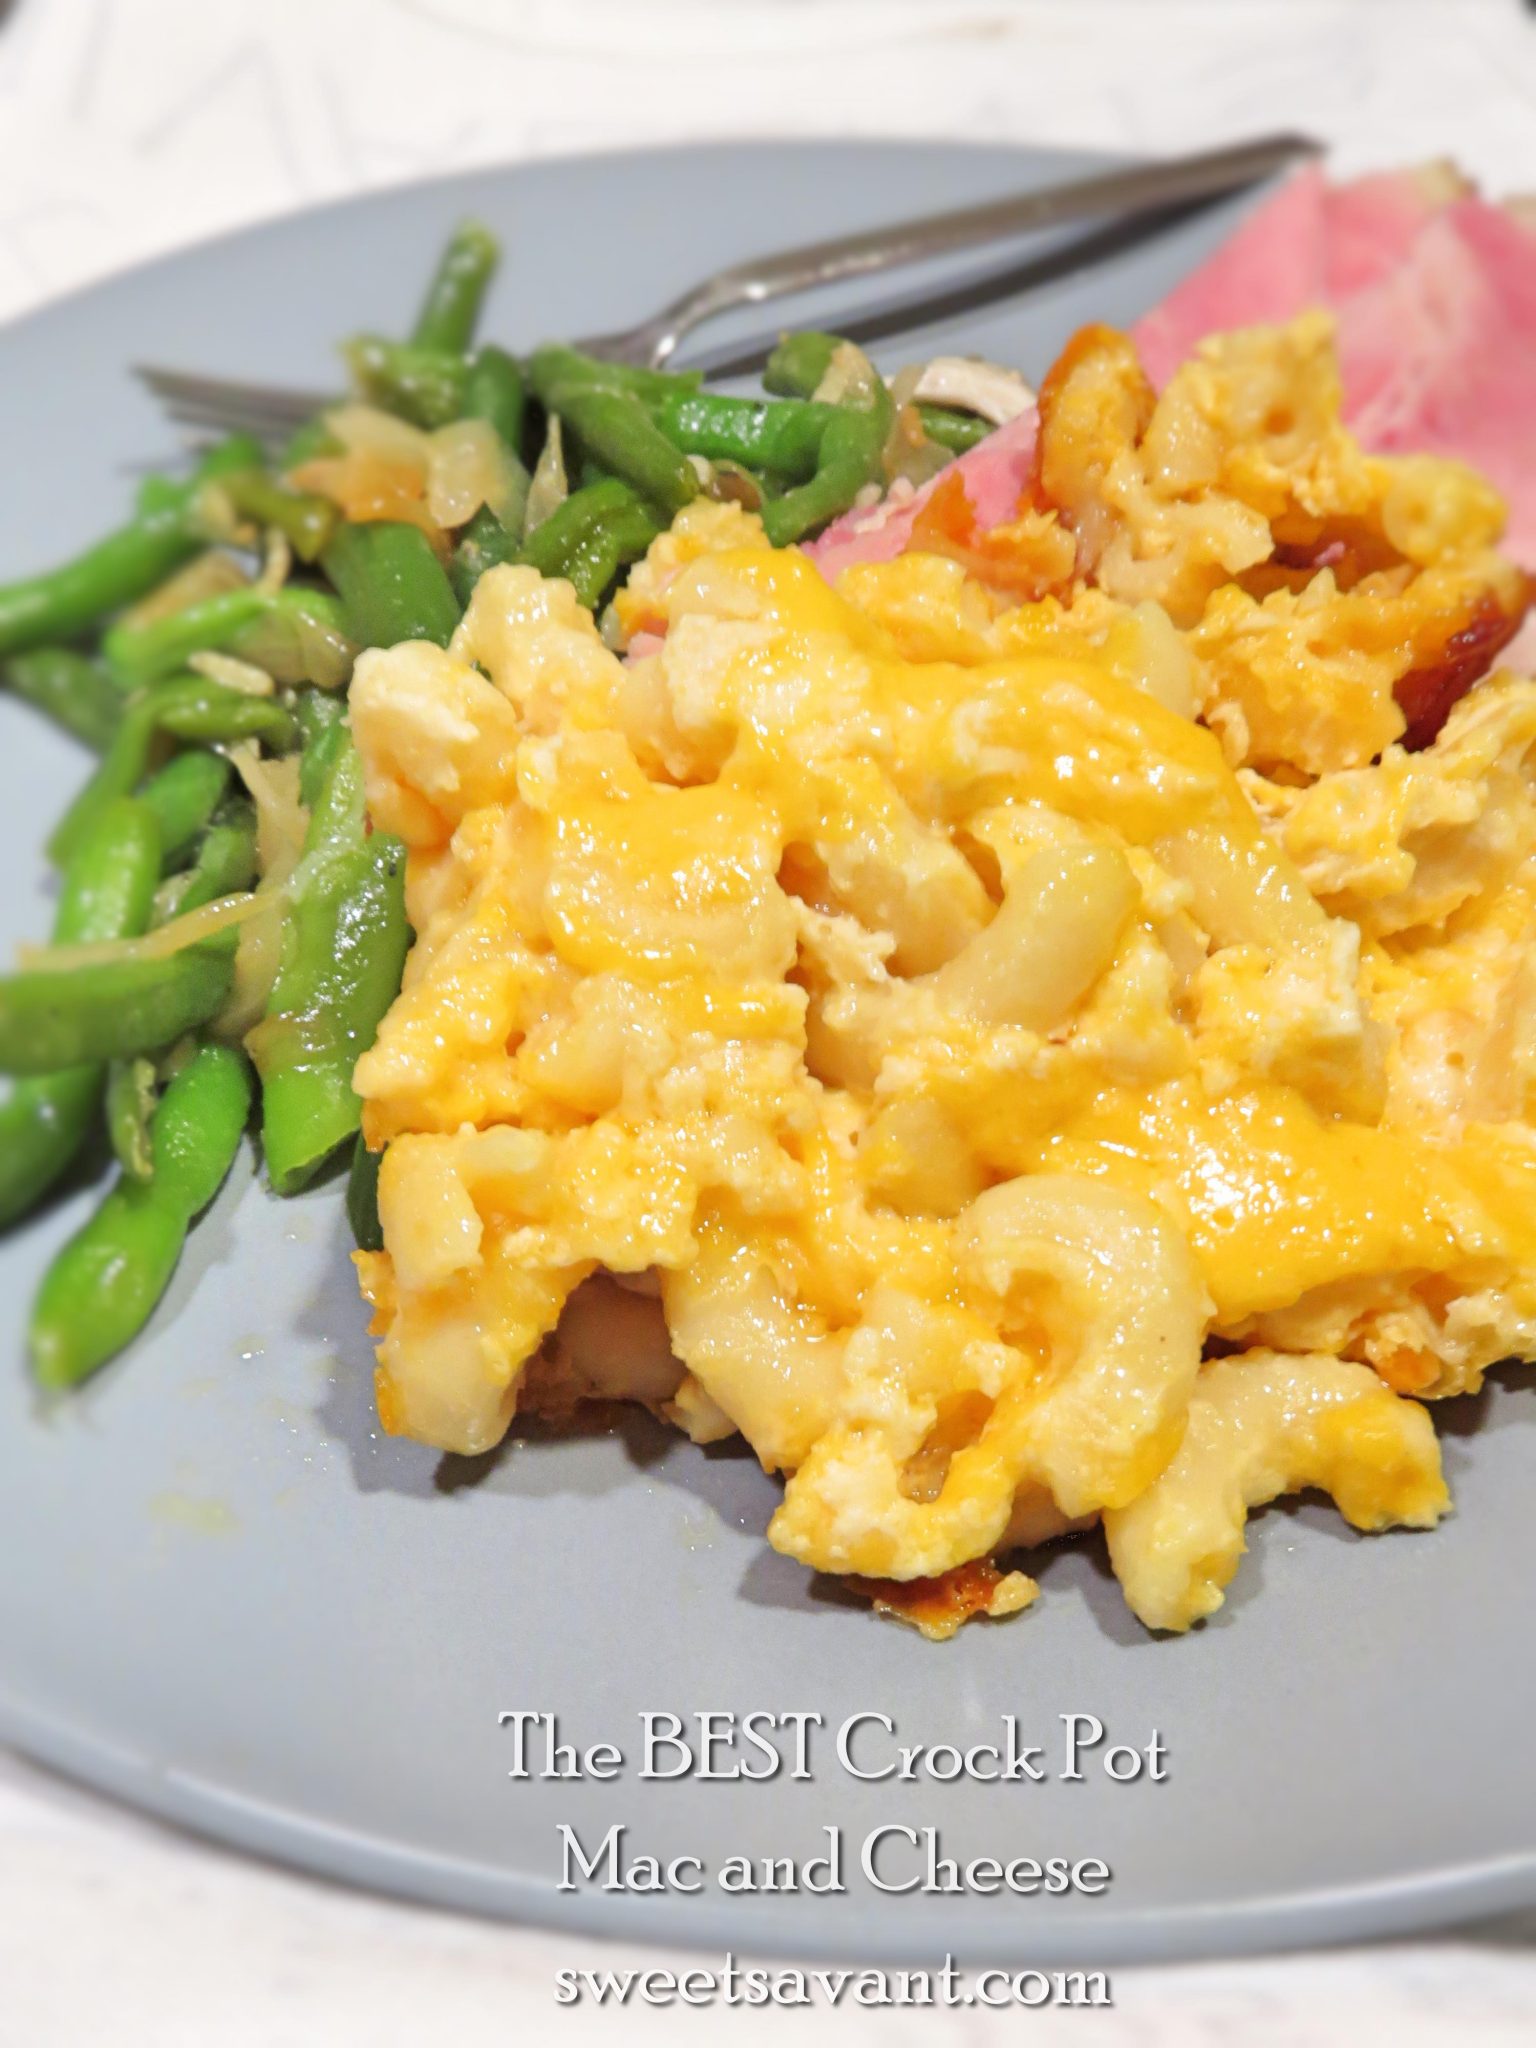 the best crockpot macaroni and cheese recipe sweetsavant.com America's best food blog